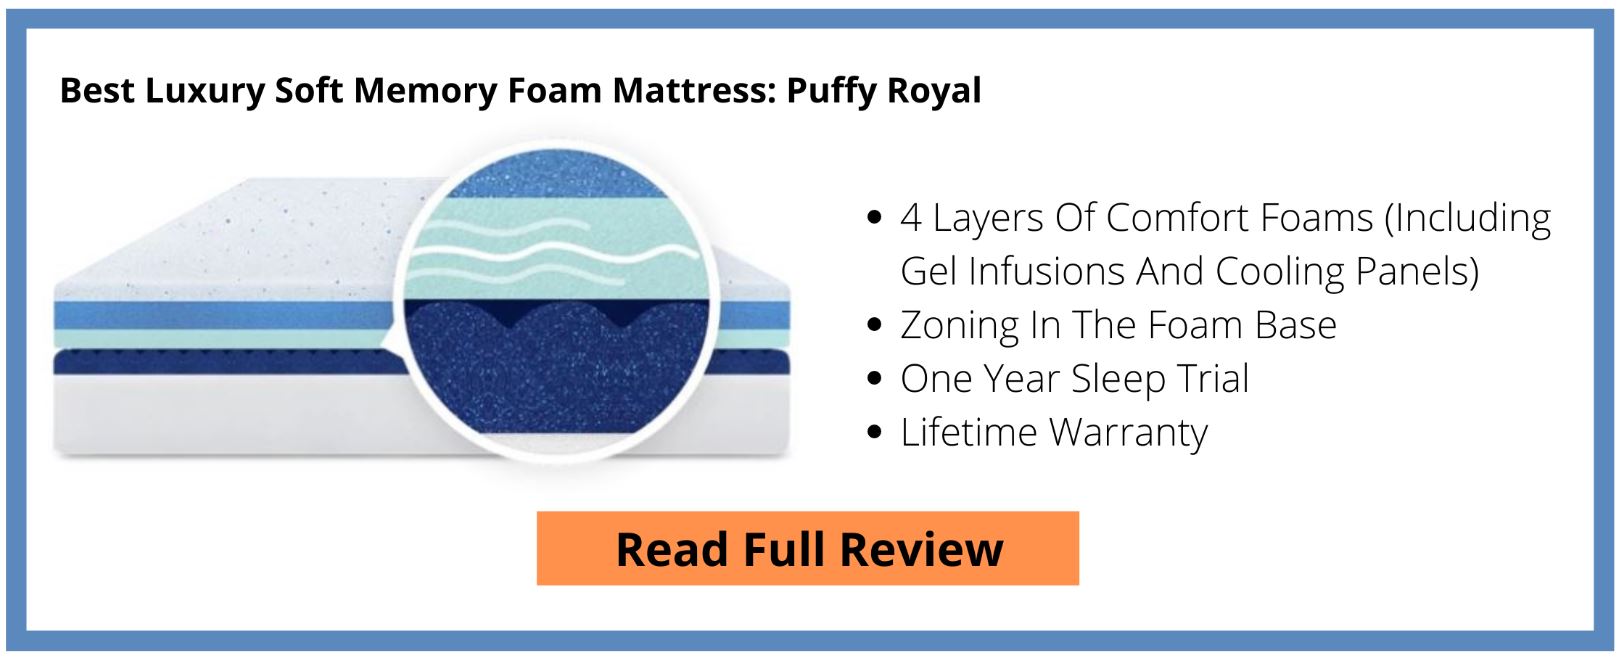 Puffy Royal Mattress Review Button